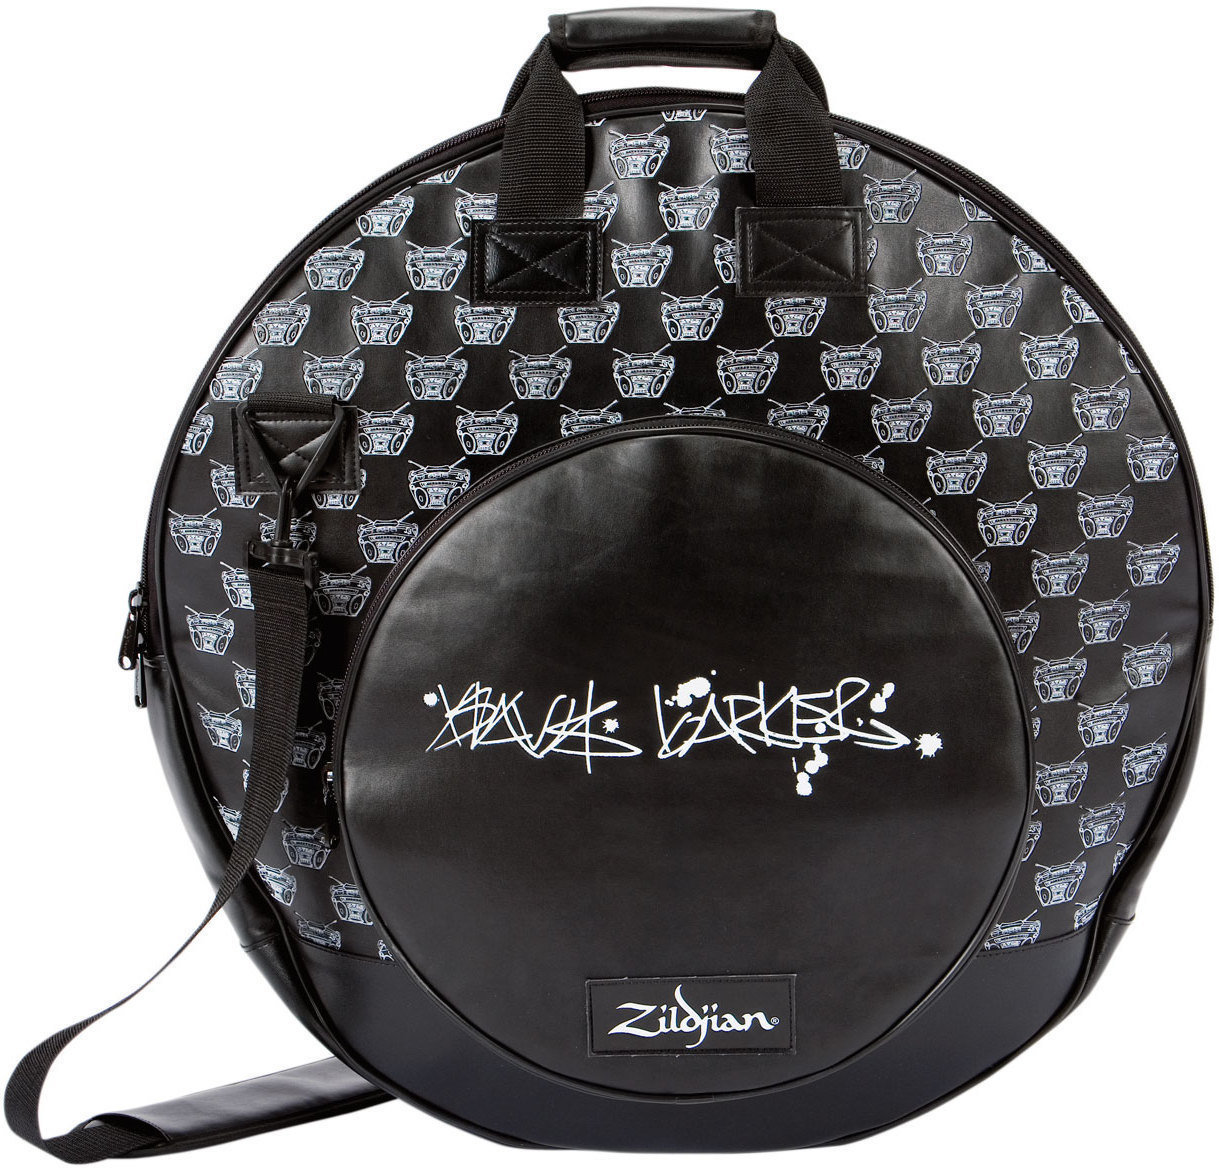 Cymbal Bag Zildjian Travis Barker Boom Box Cymbal Bag